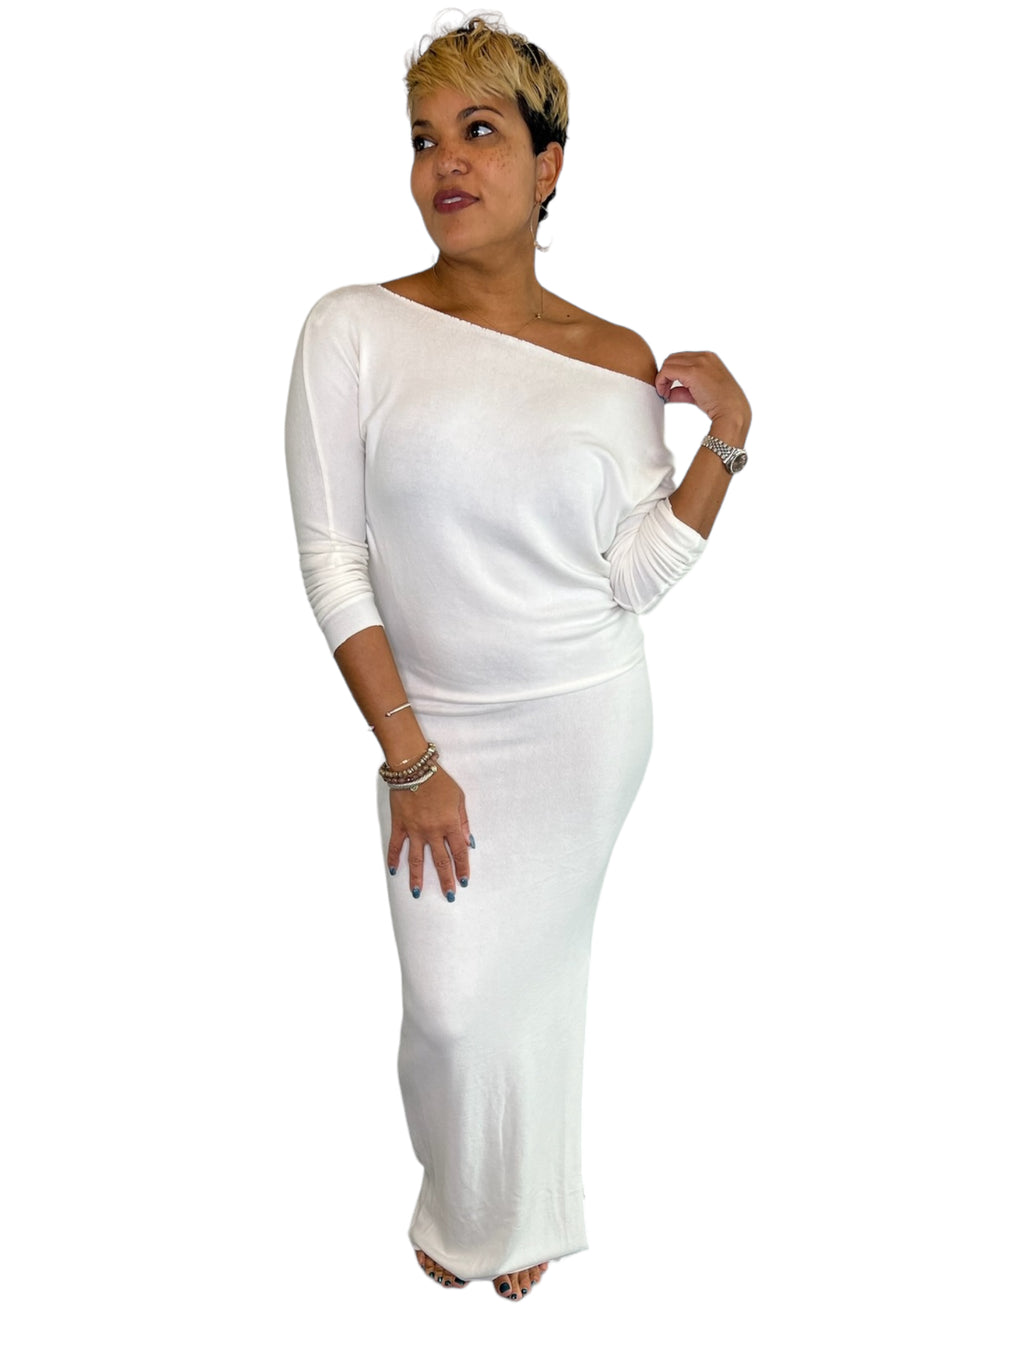 MYA - Long Fitted Dress - White - S-016